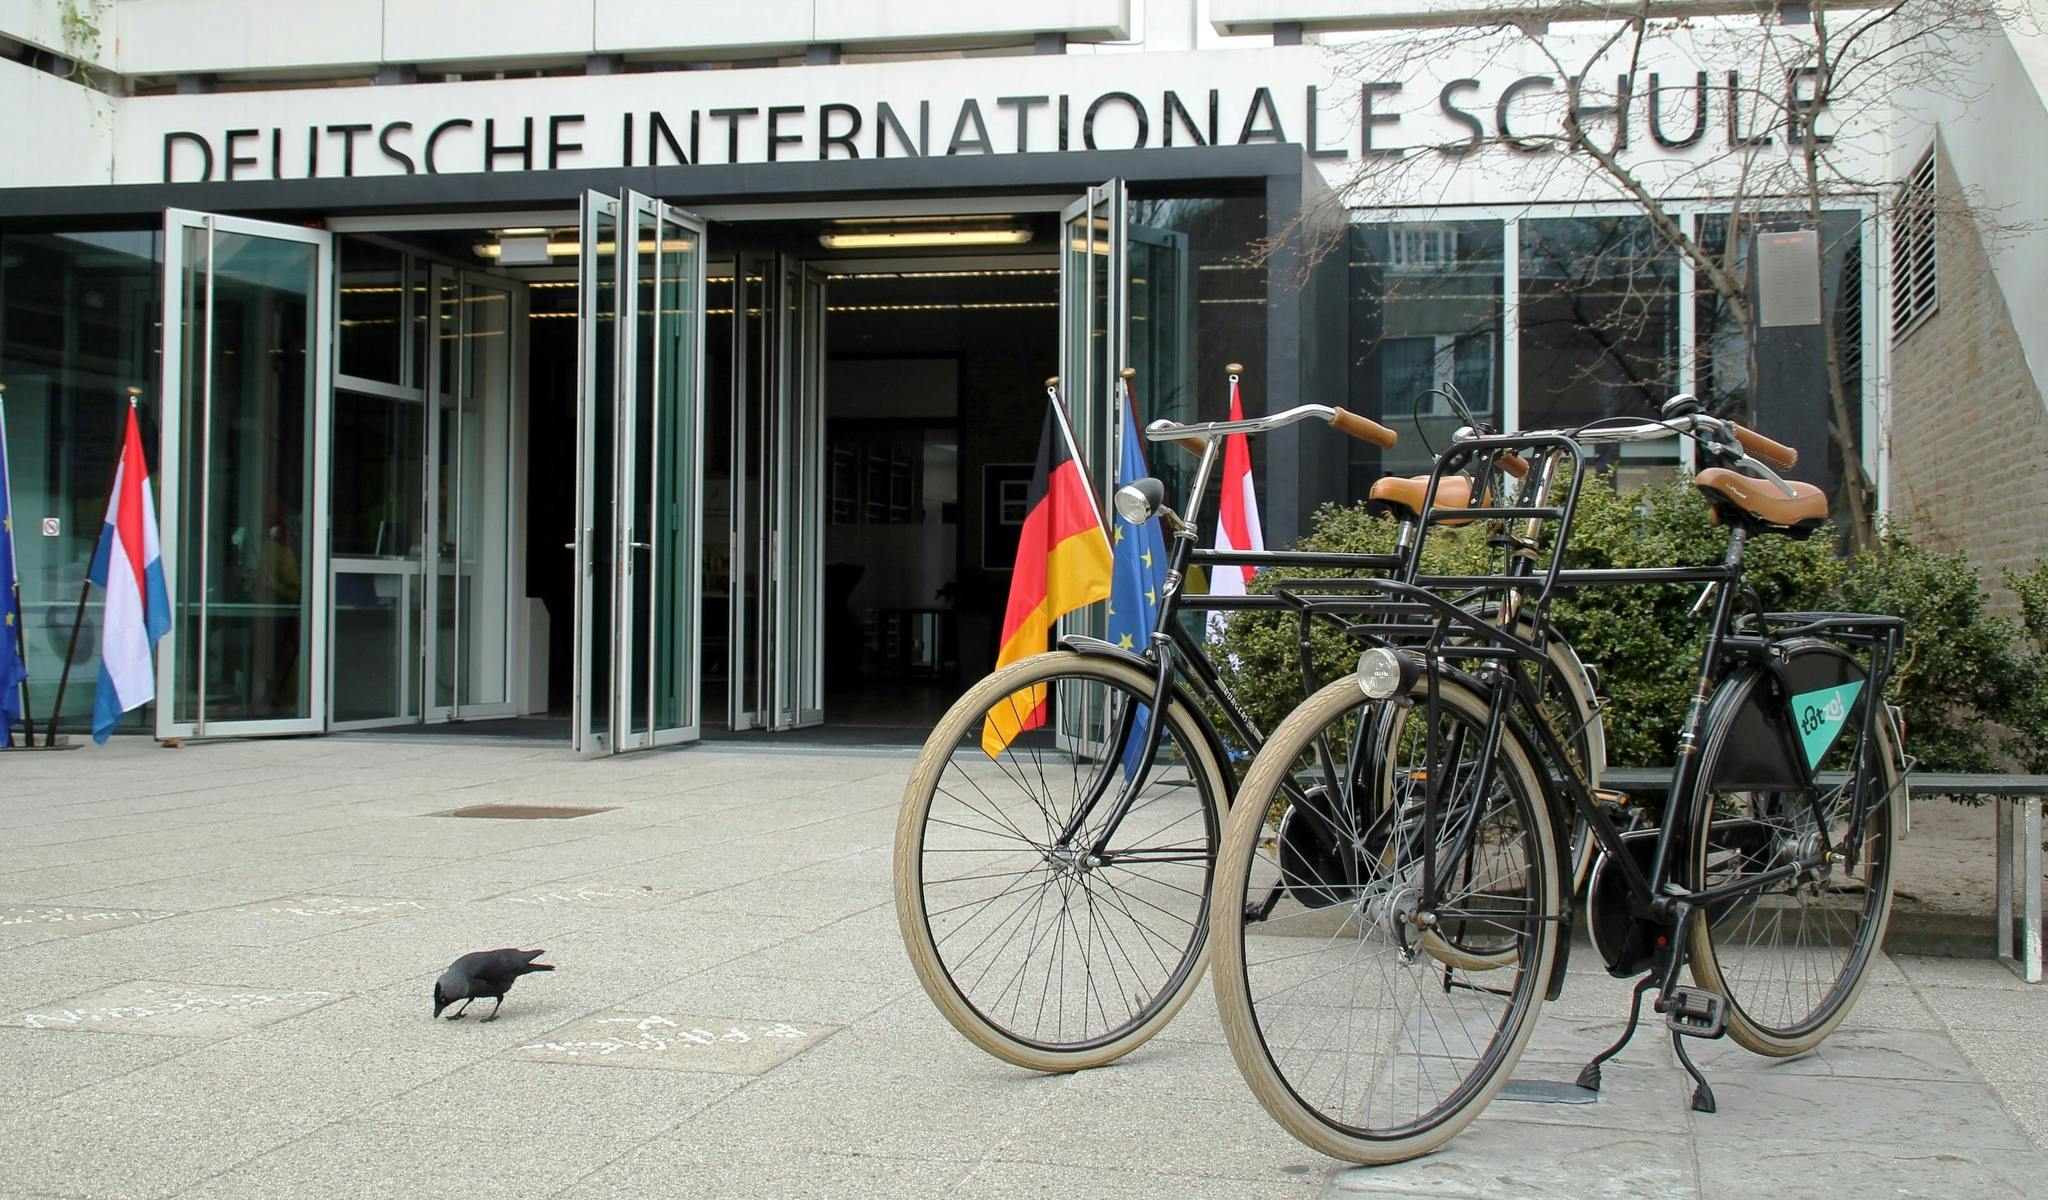 Duitse Internationale School Den Haag